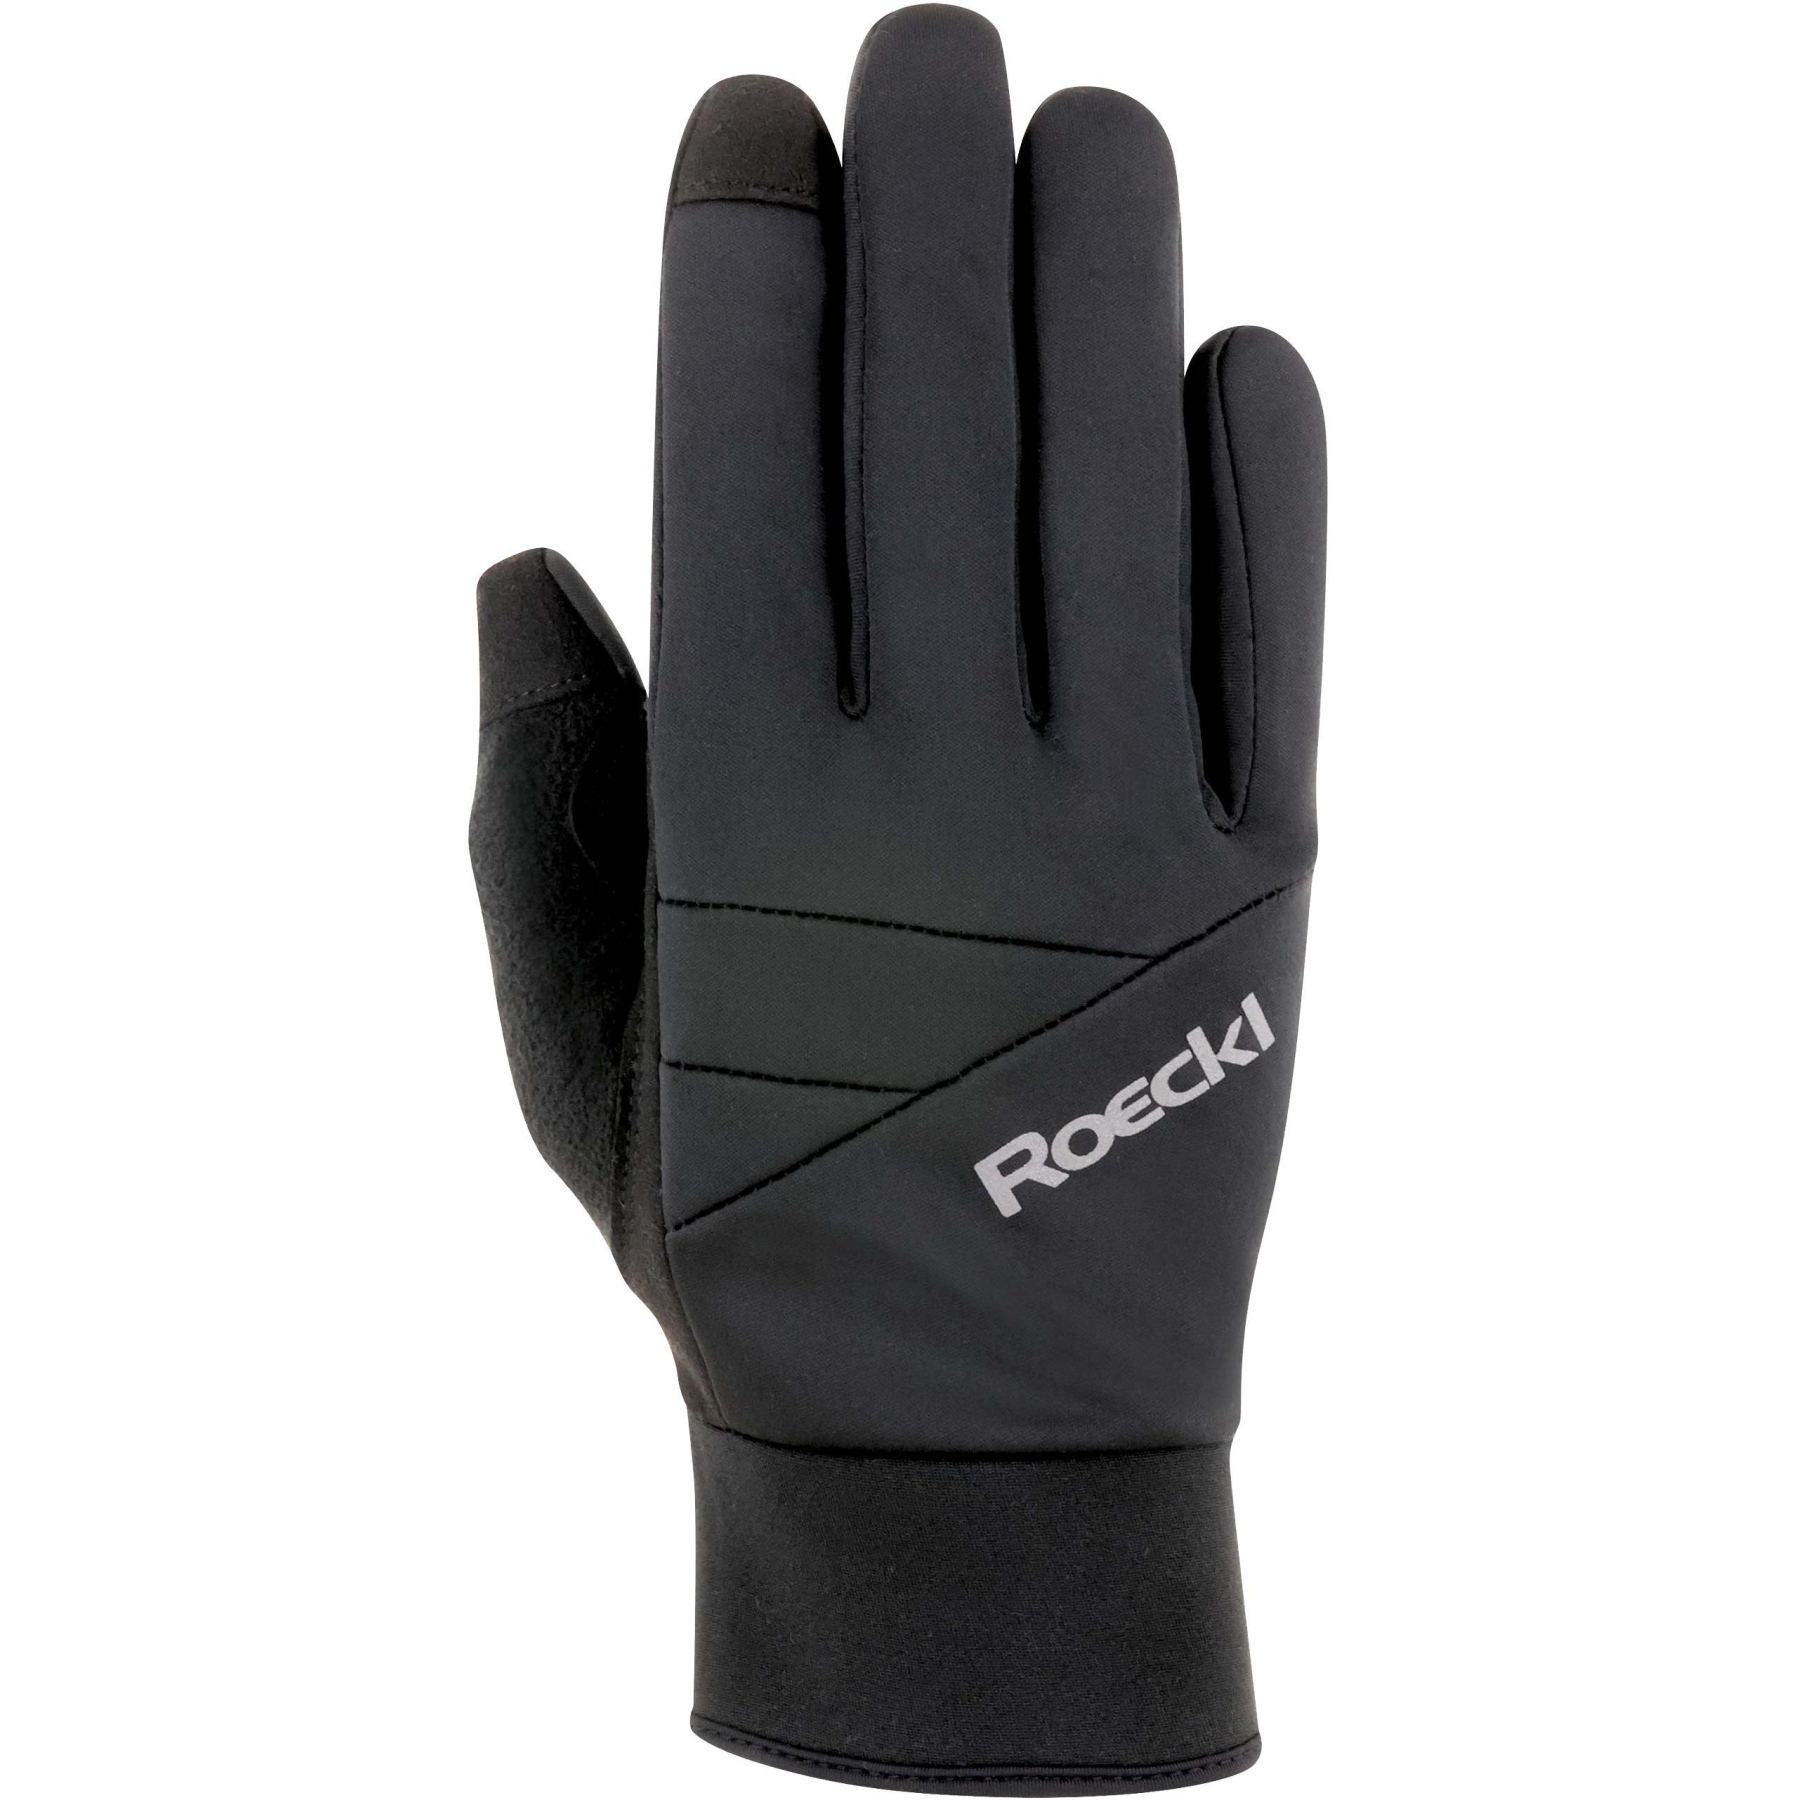 Productfoto van Roeckl Sports Reichenthal Kinderen Fietshandschoenen - zwart 9000